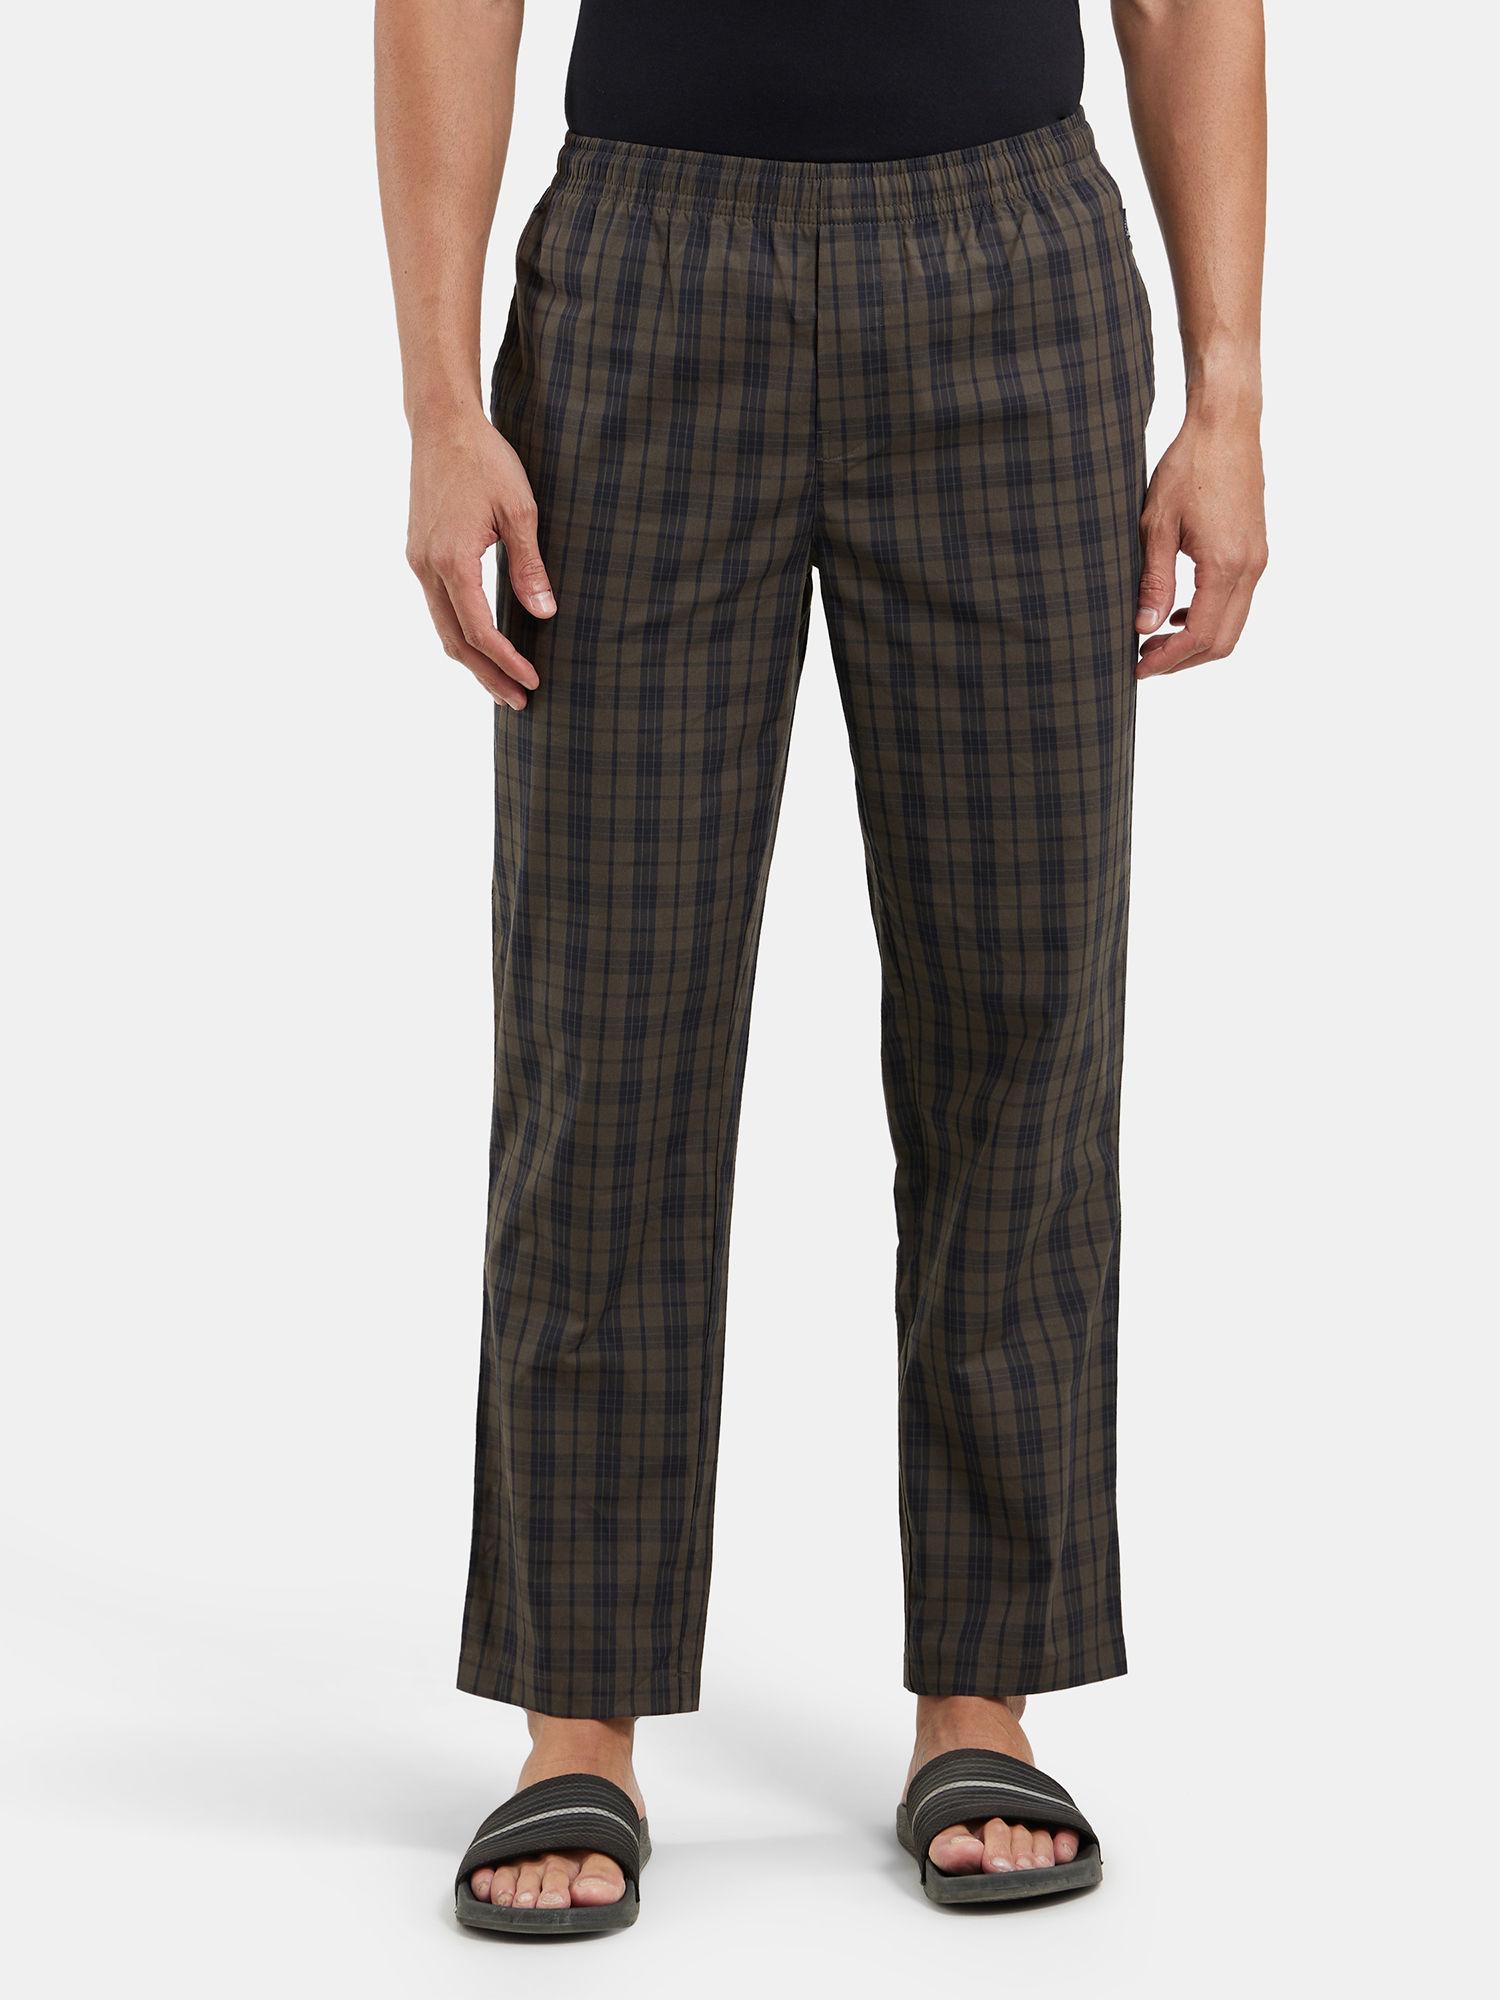 9009-mens-super-combed-cotton-satin-regular-fit-checkered-pyjama-black-olive